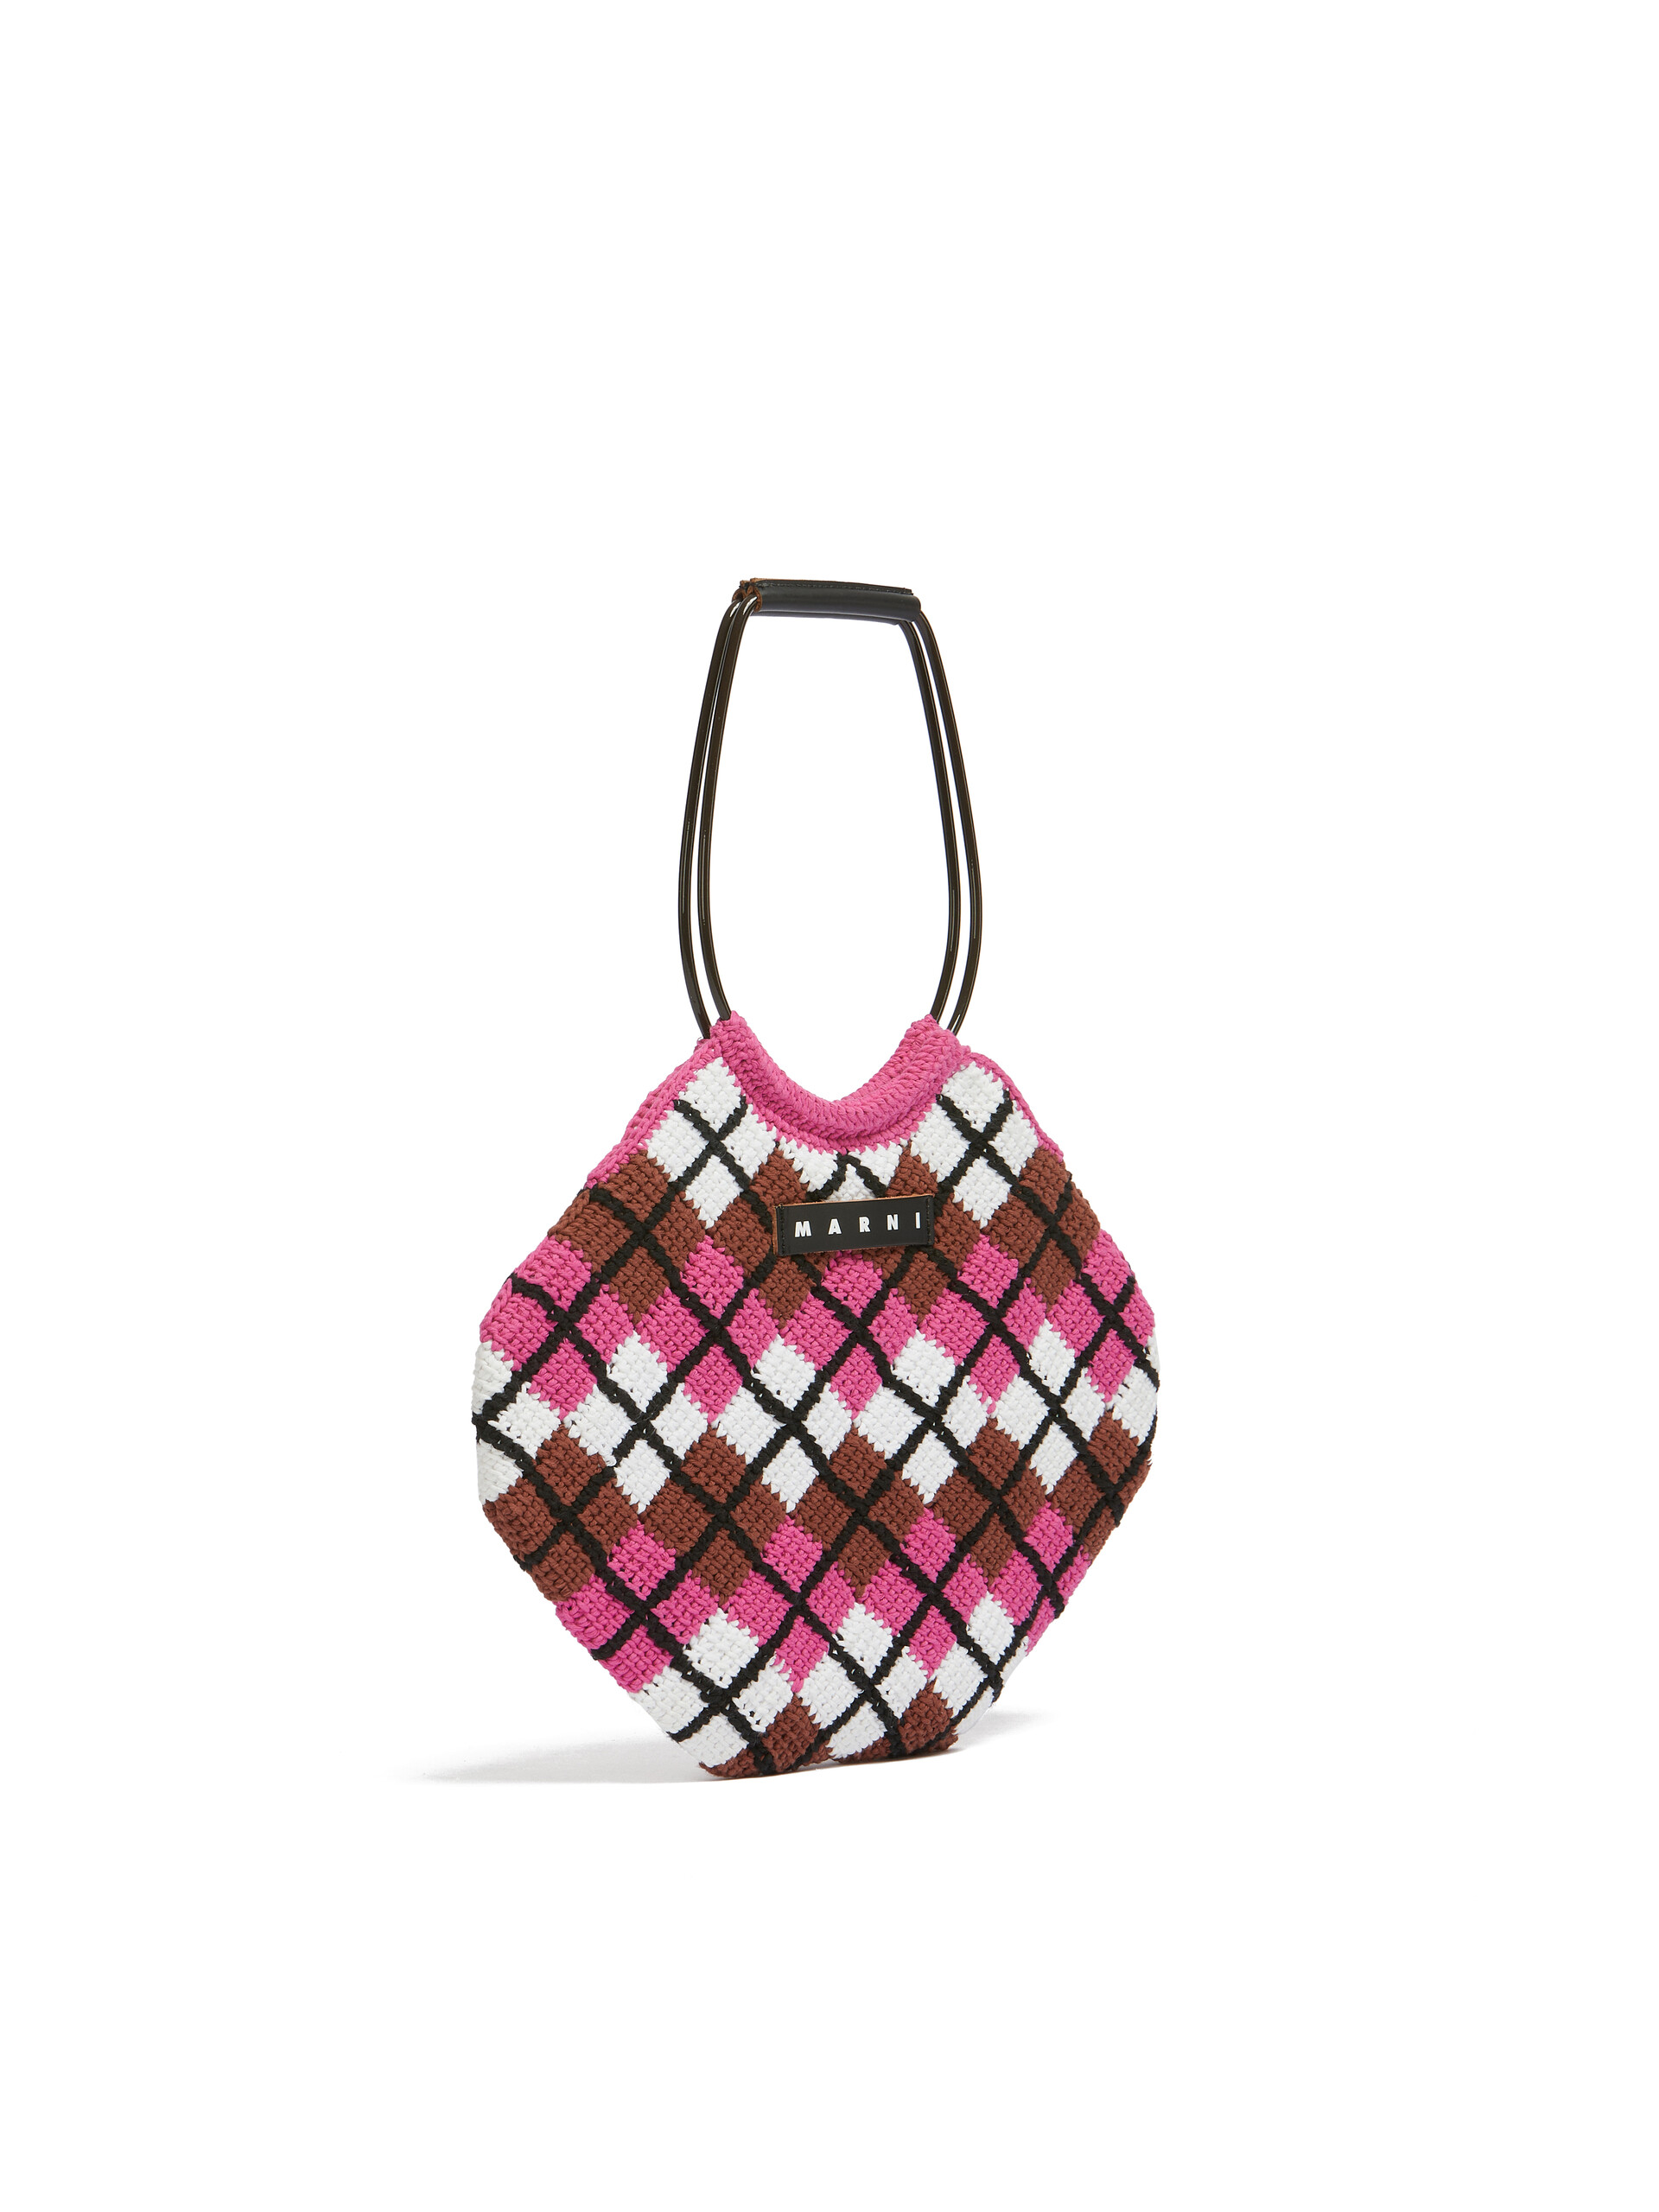 Pink rhombus cotton knit MARNI MARKET handbag - Shopping Bags - Image 2